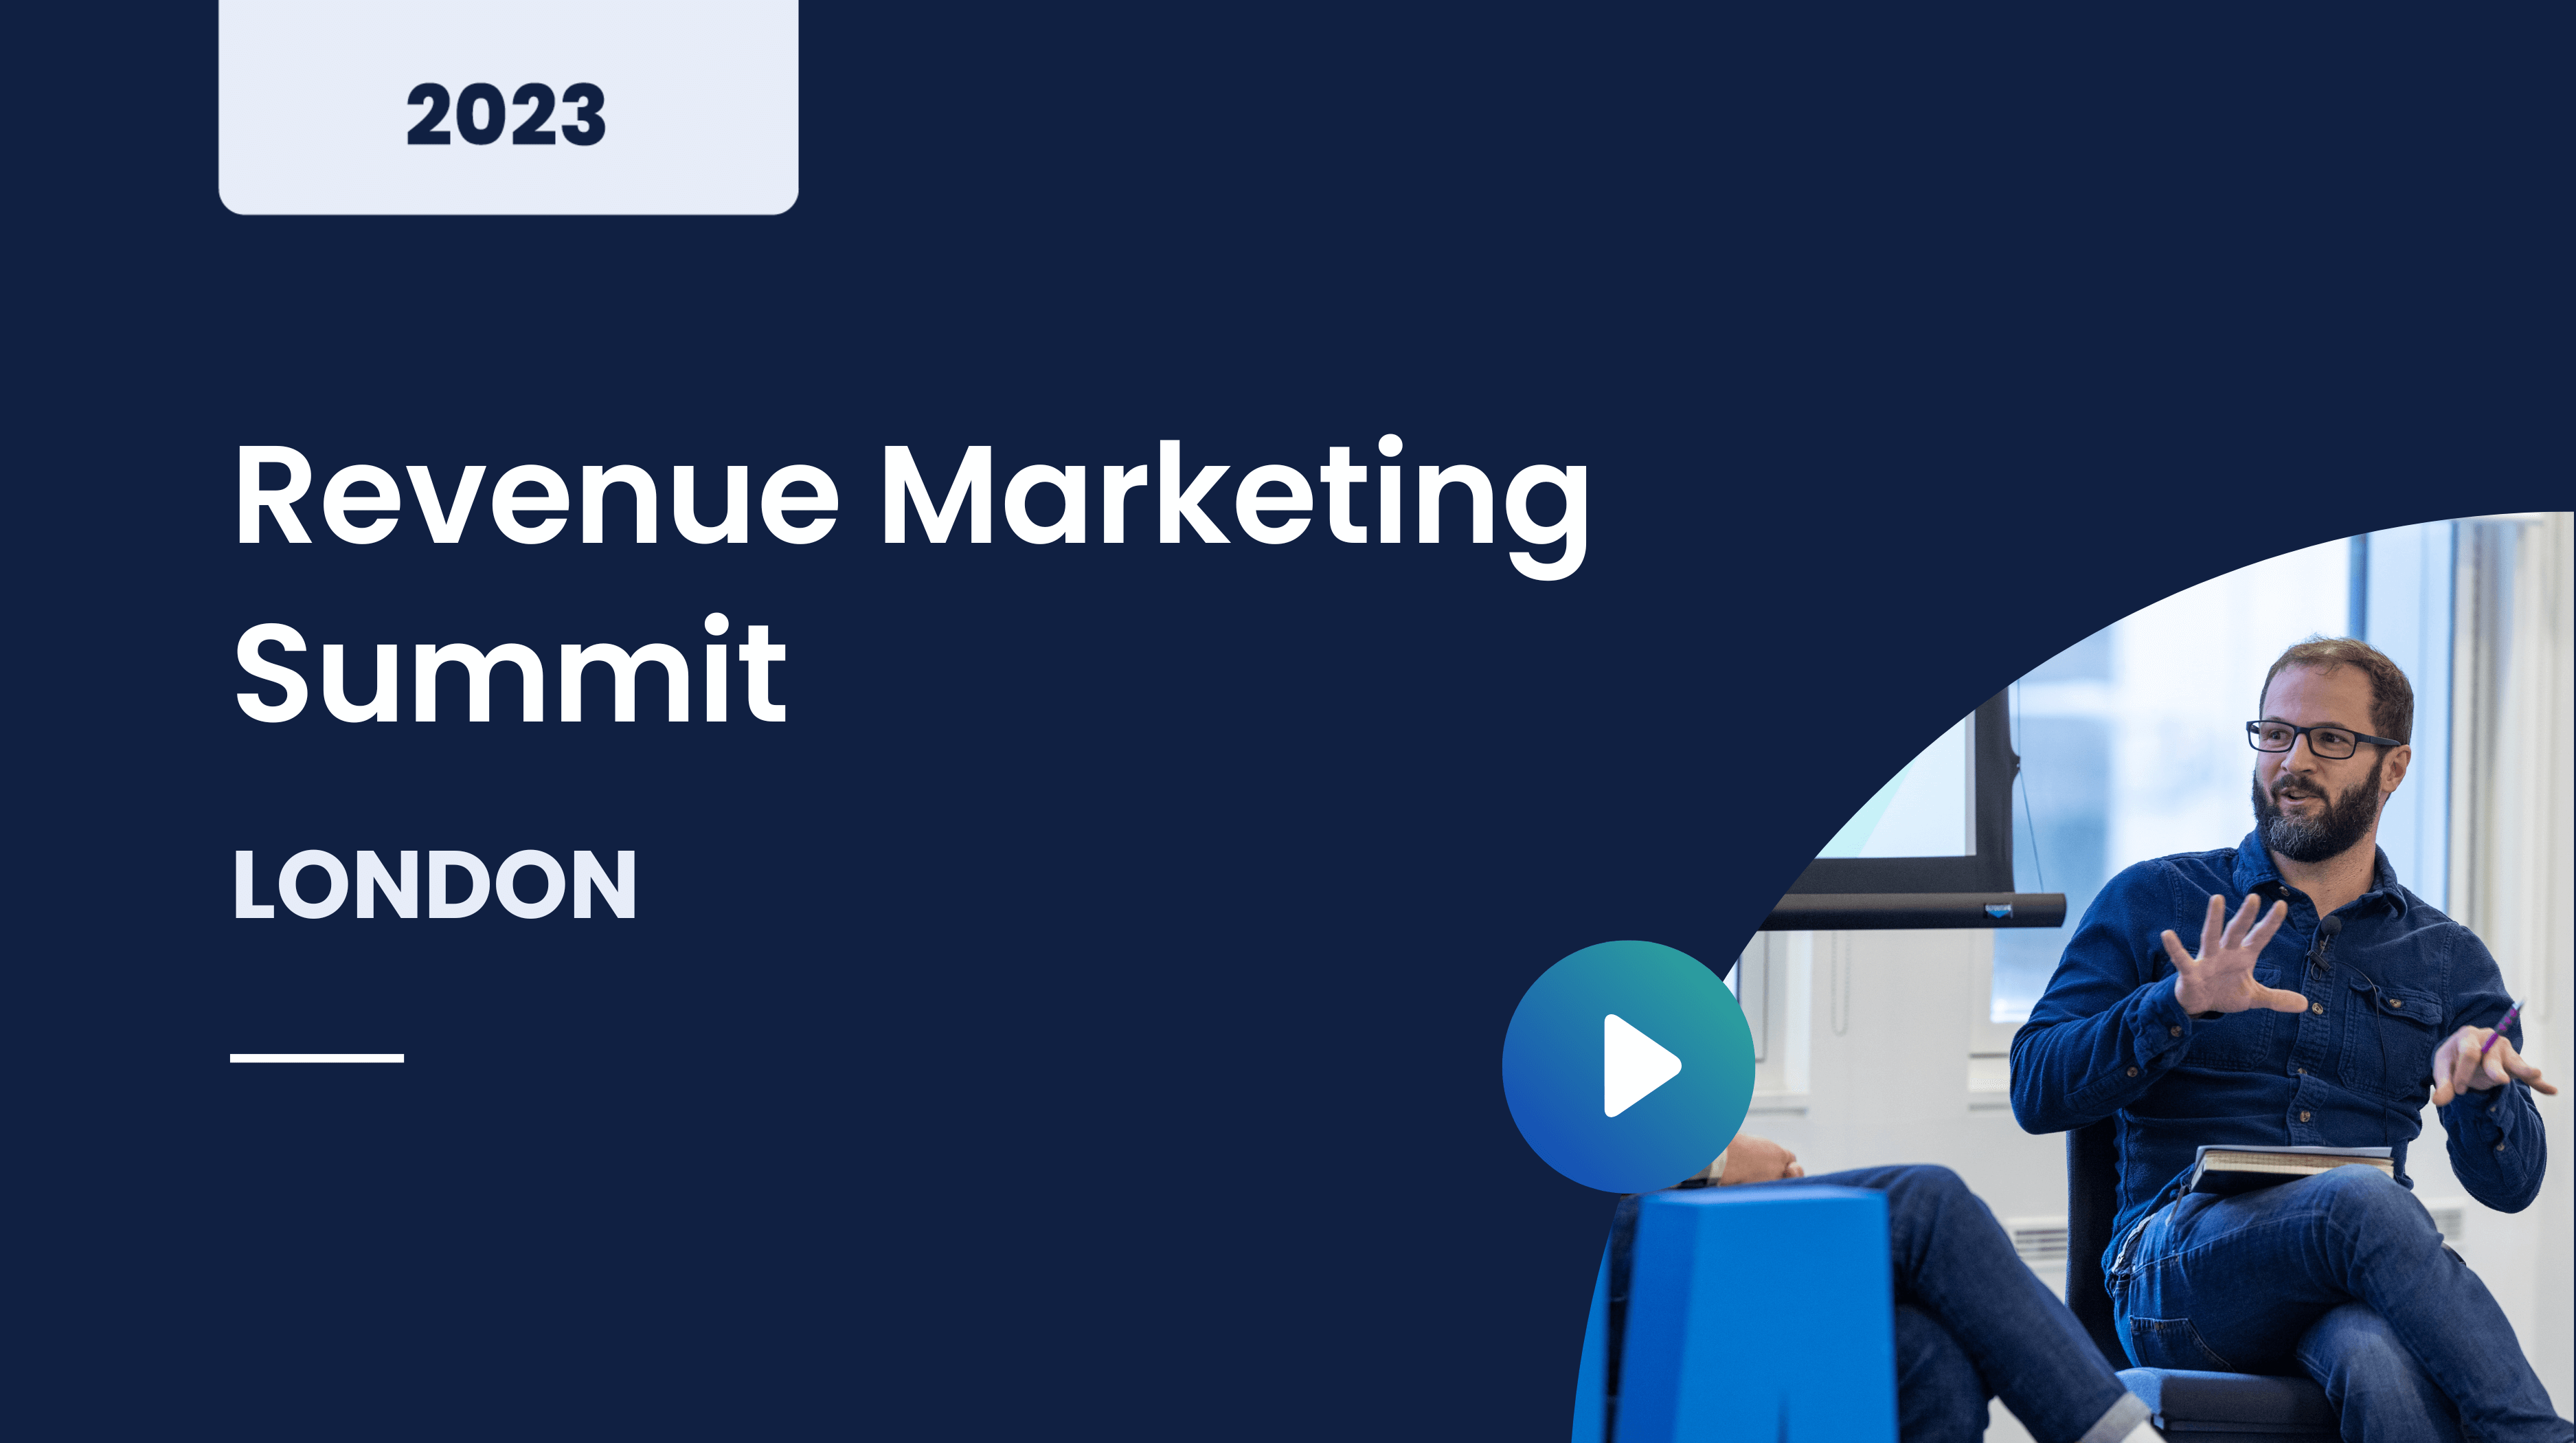 Revenue Marketing Summit London November 2023